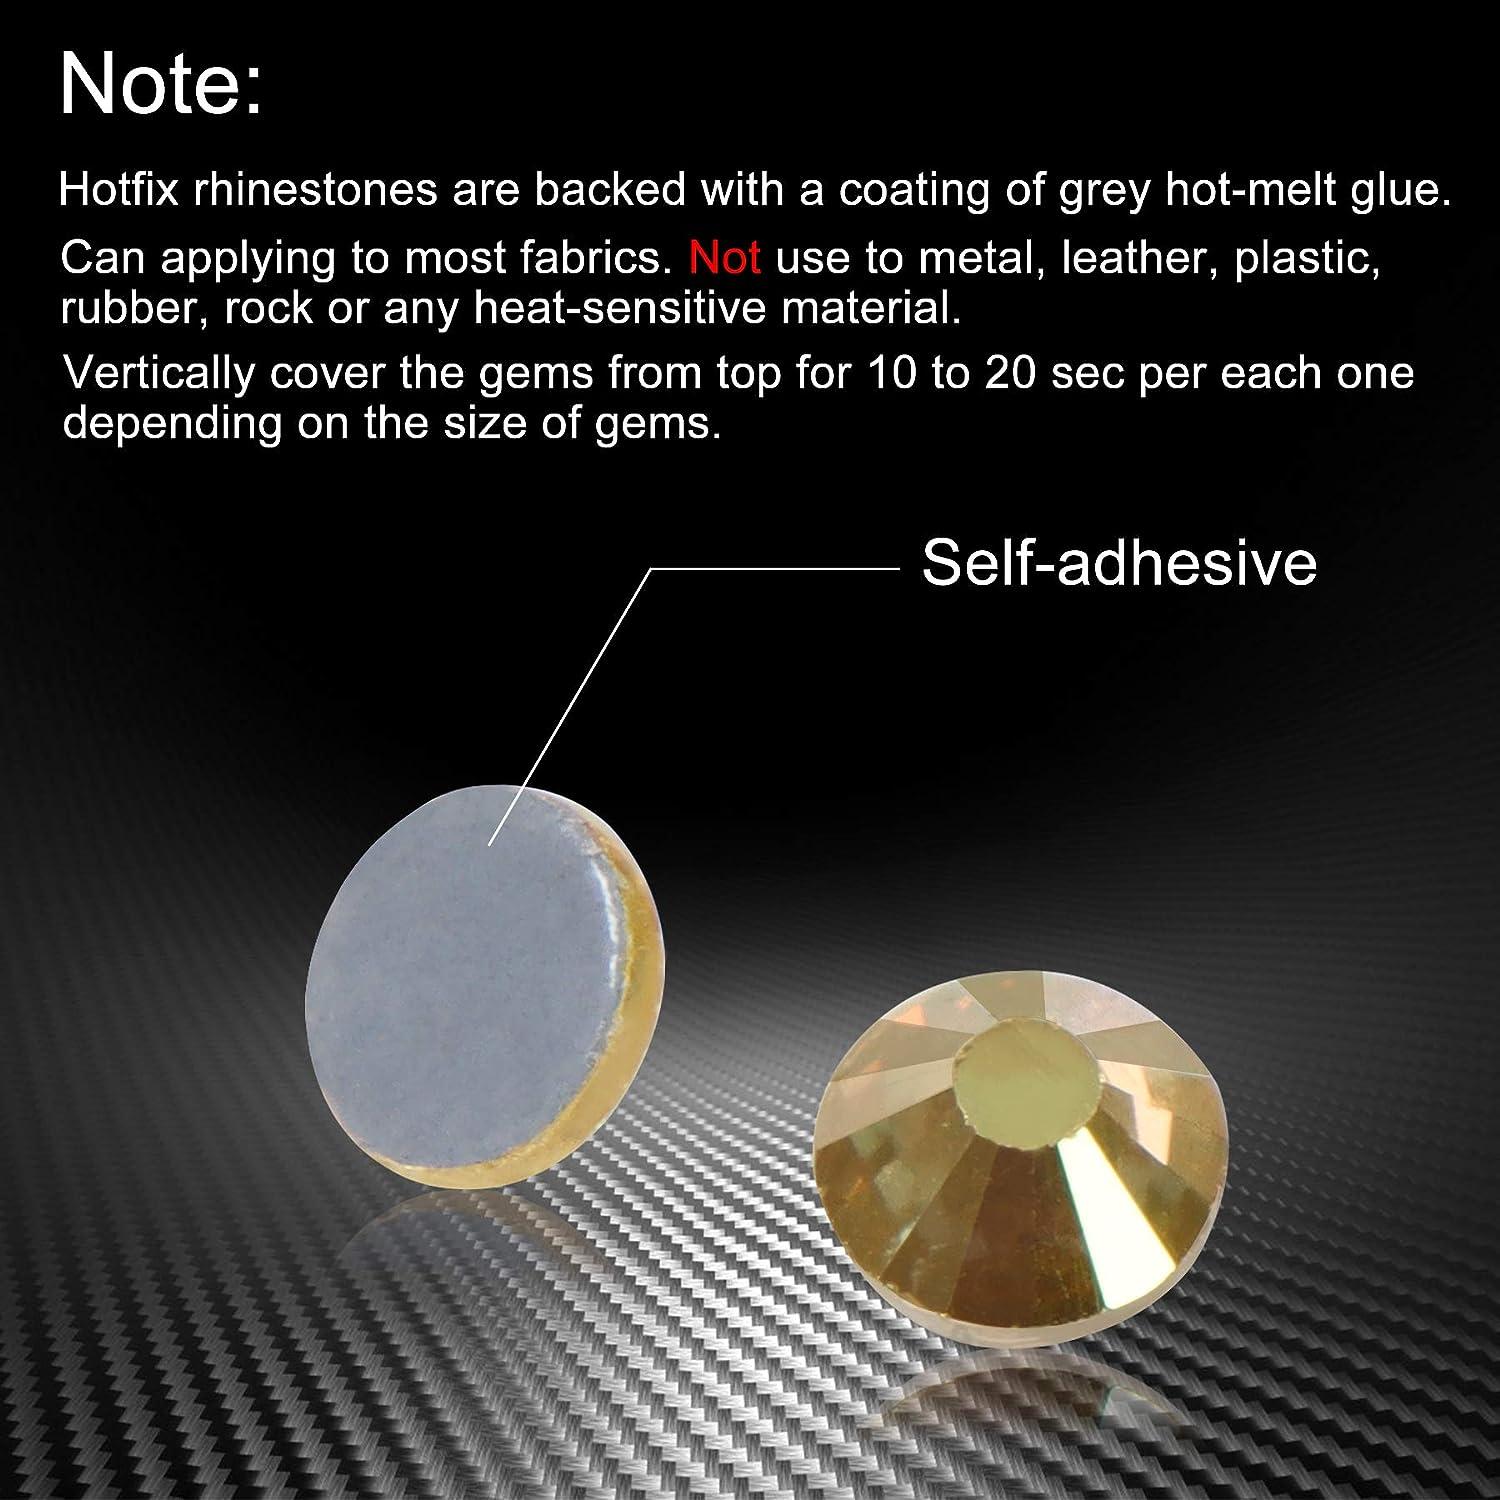 Jollin Hotfix Crystal Flatback Rhinestones 3.2mm SS12(1440pcs) SS12 1440pcs Crystal